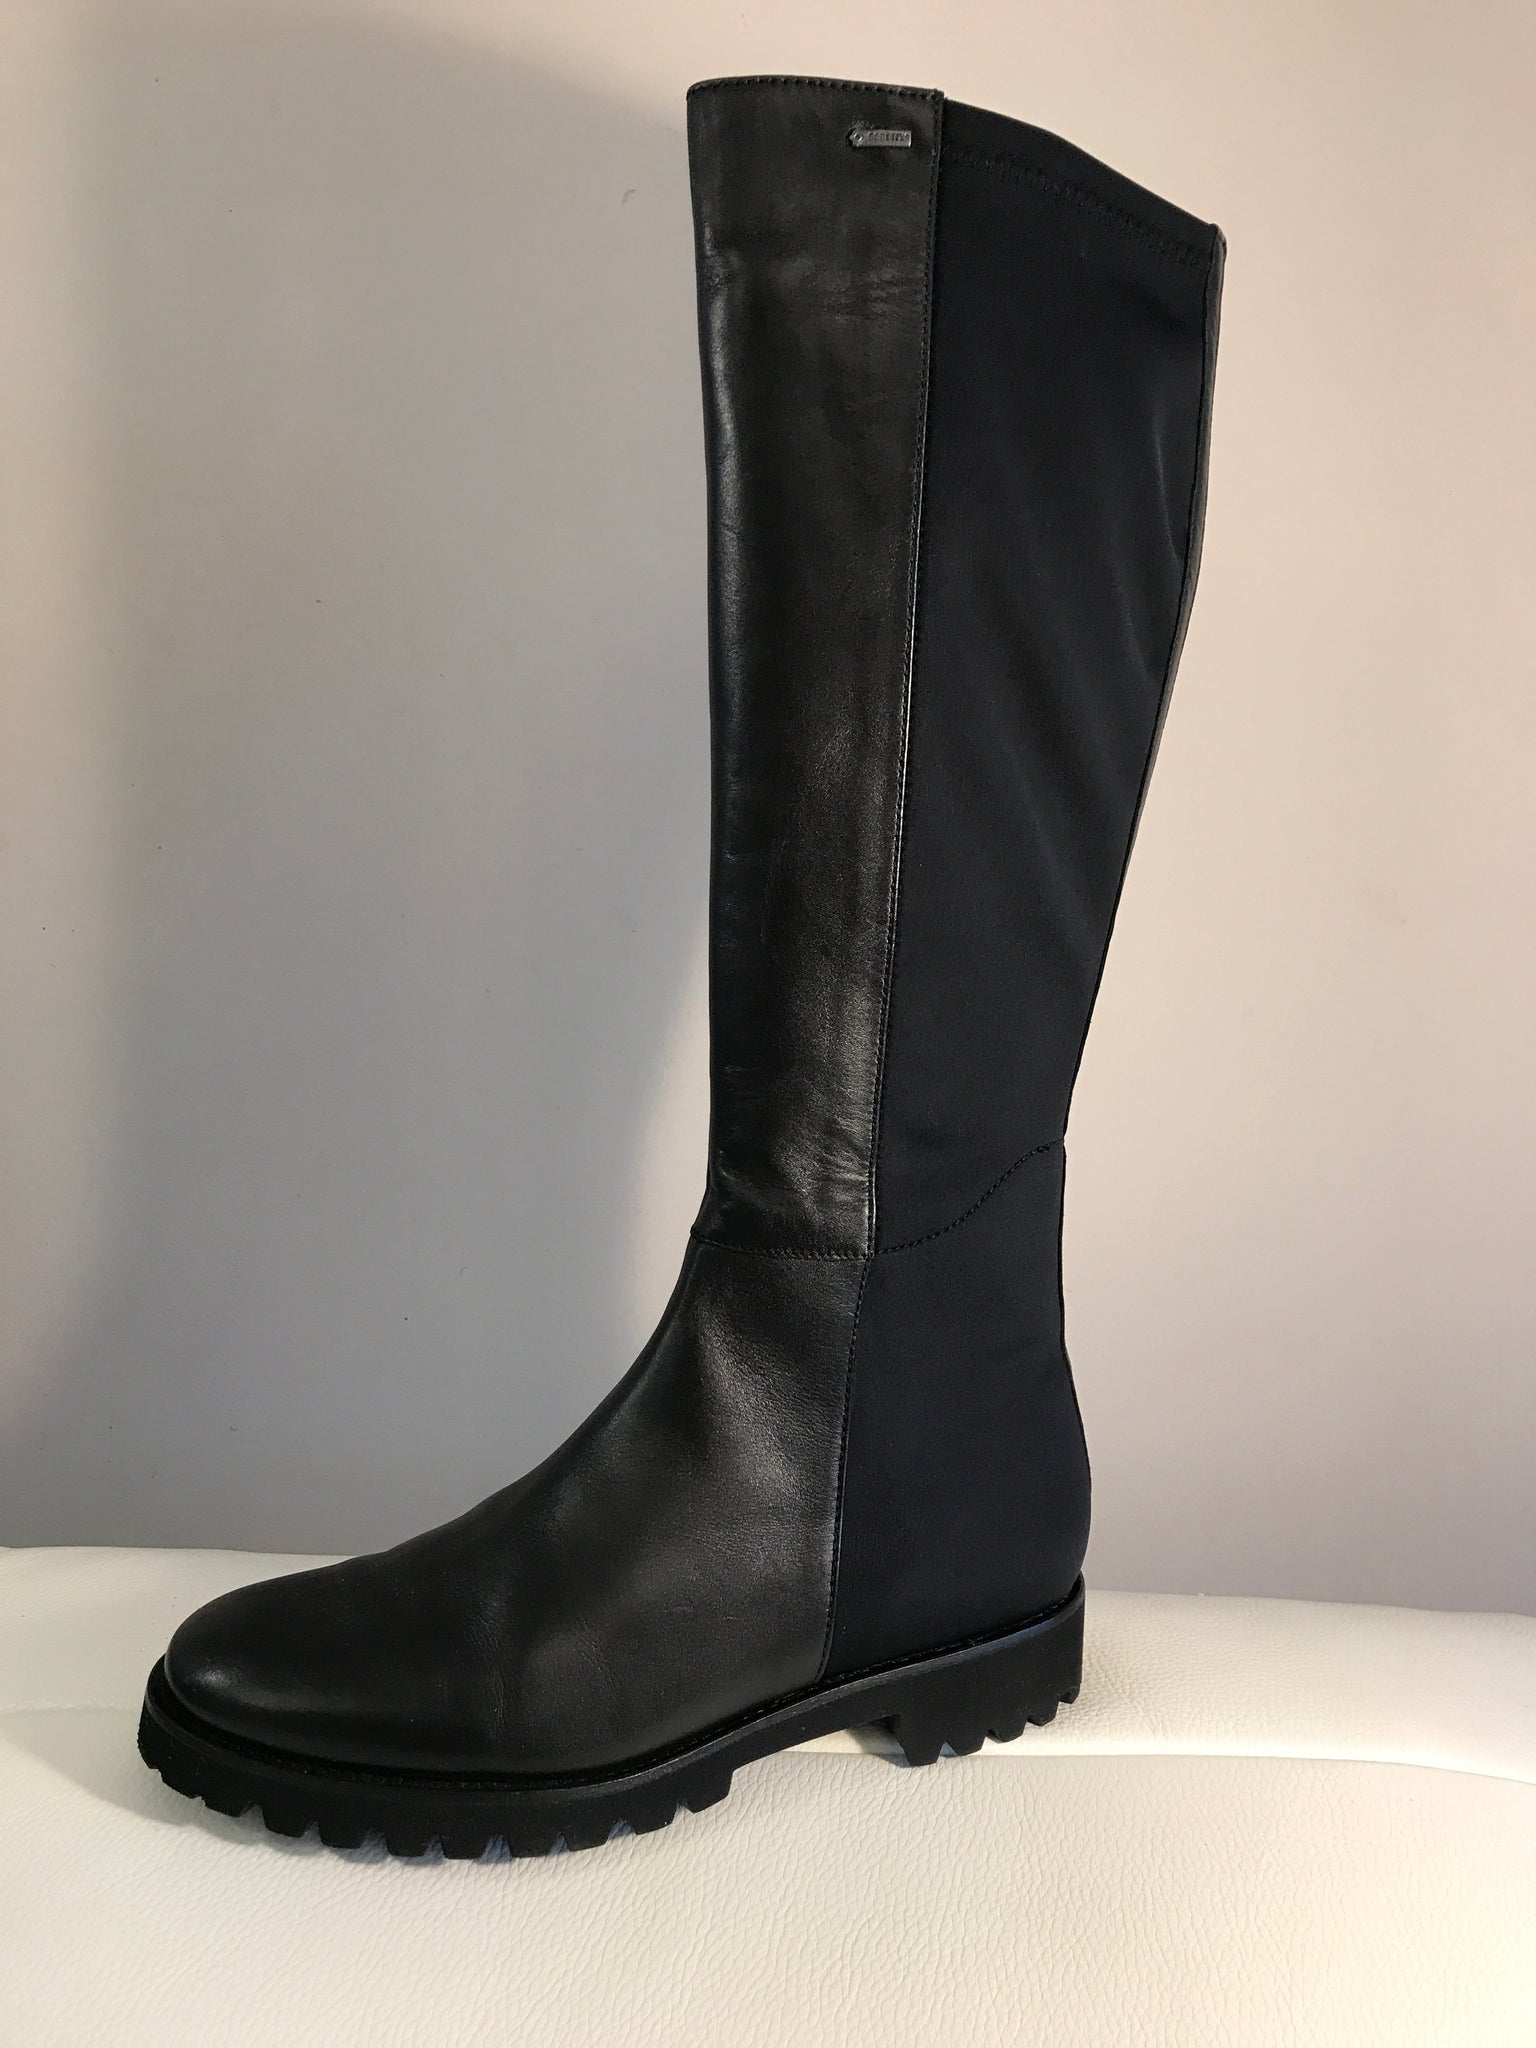 Hogl black leather knee high boot